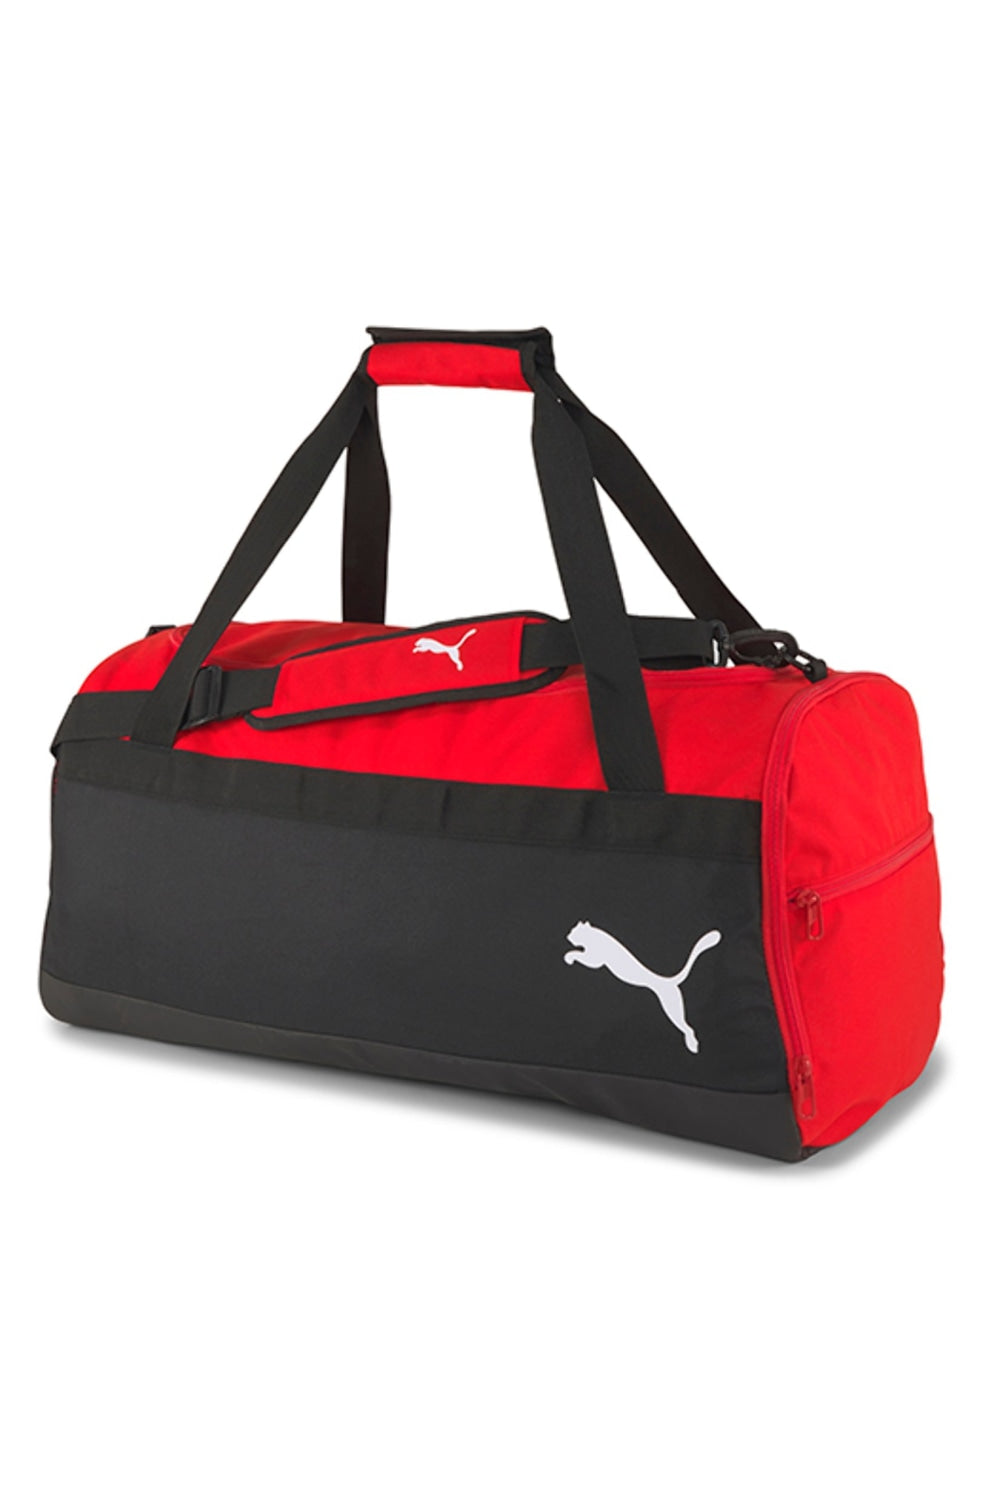 Medium Duffle Bag - Red/Black